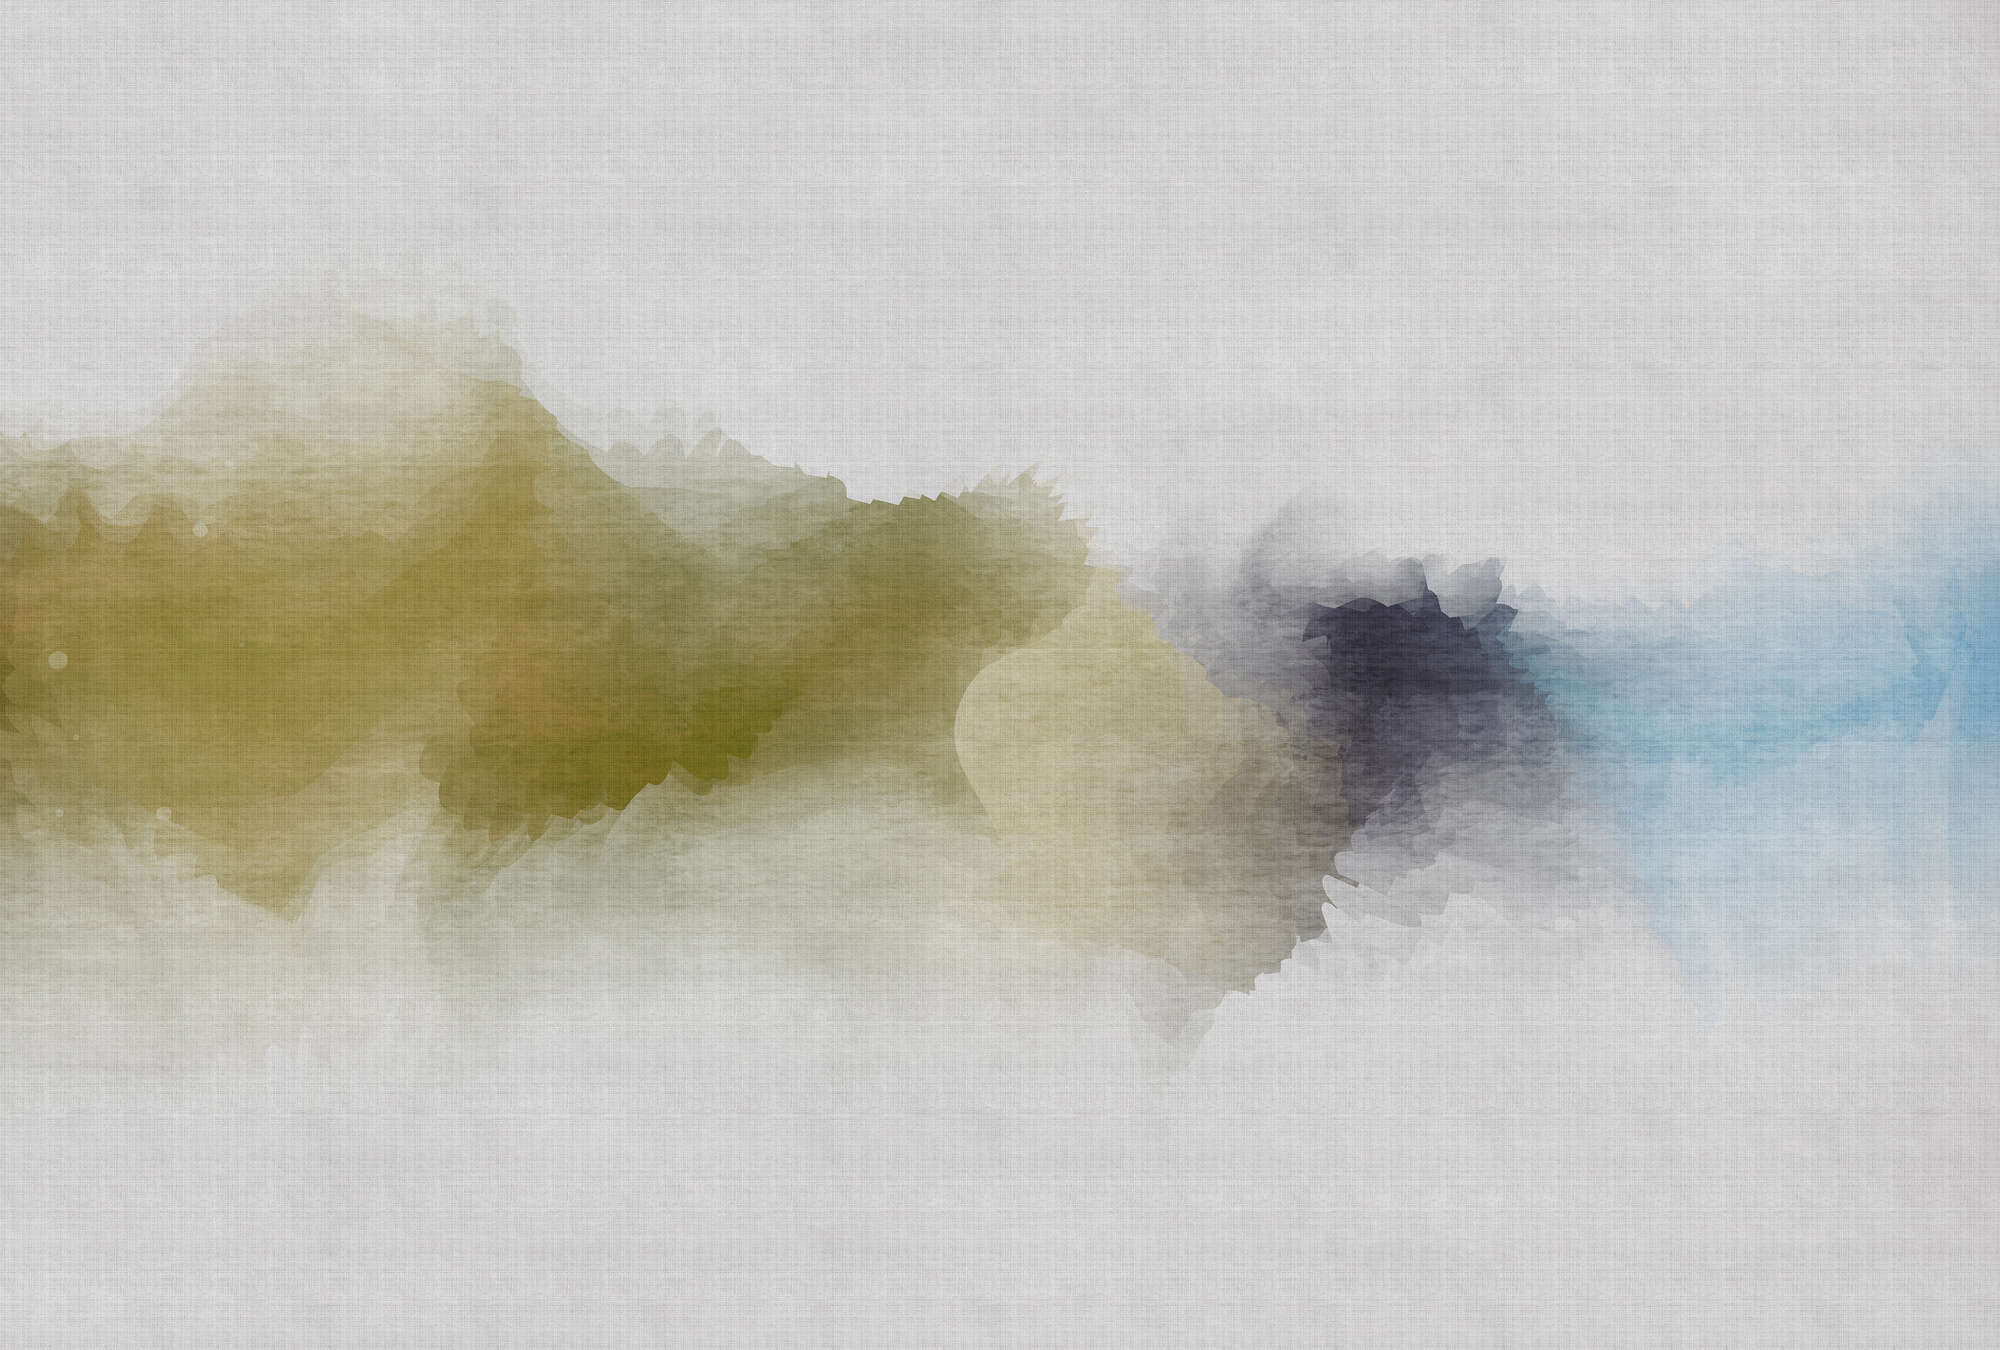             Daydream 3 - Fototapete wolkiges Aquarell-Muster- Naturleinen Struktur – Blau, Gelb | Perlmutt Glattvlies
        